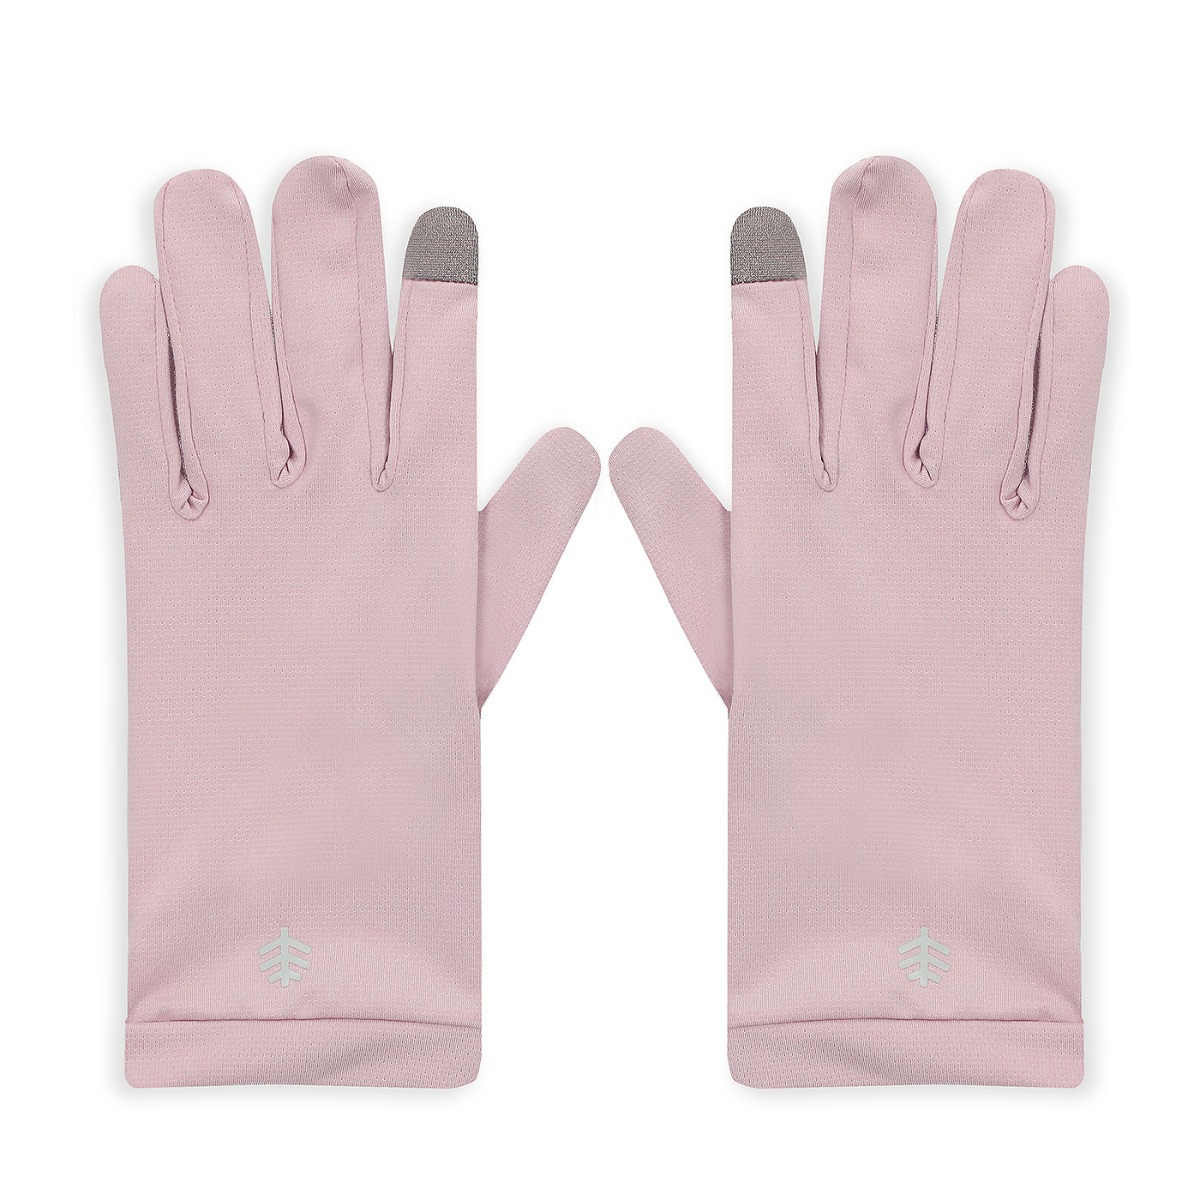 Buy UV Sun Protective Gloves - Pink Online in Kuwait